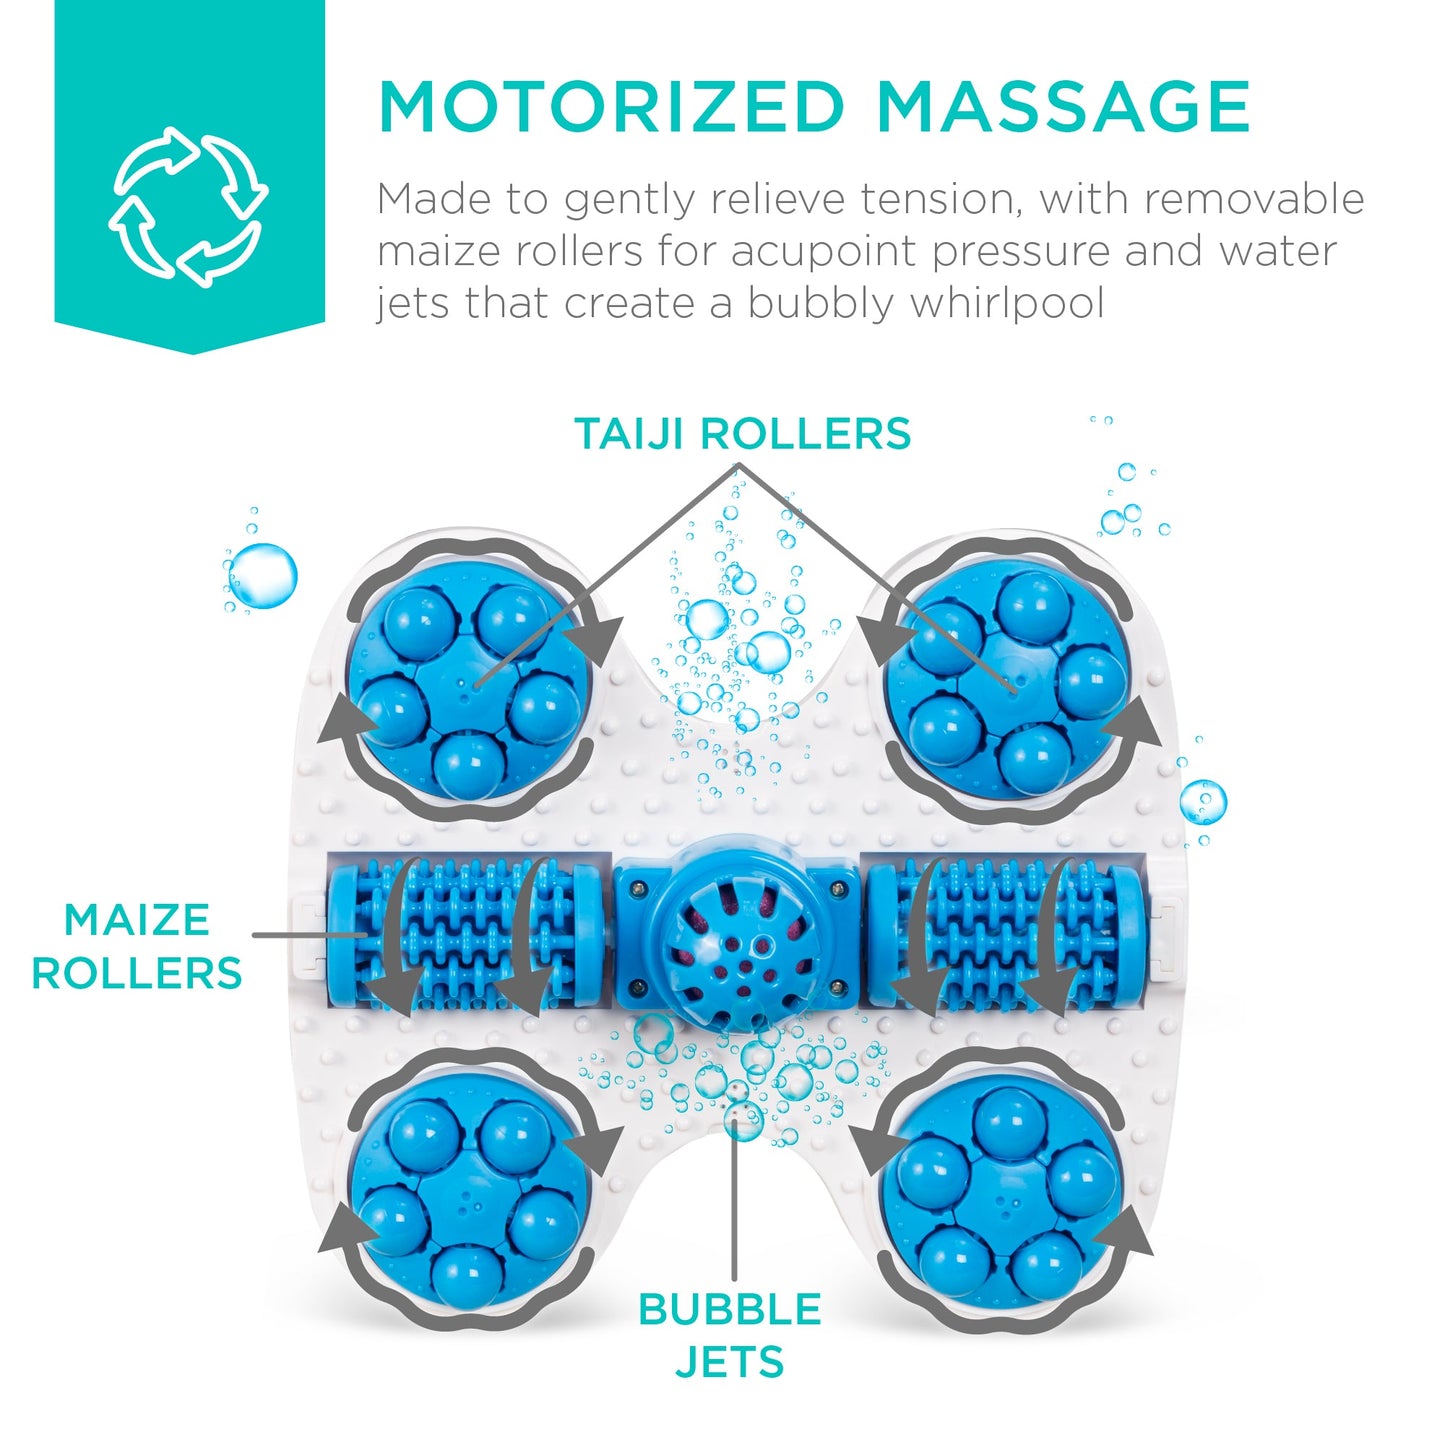 Automatic Heated Shiatsu Massage Foot Bath Spa w/ Pumice Stone